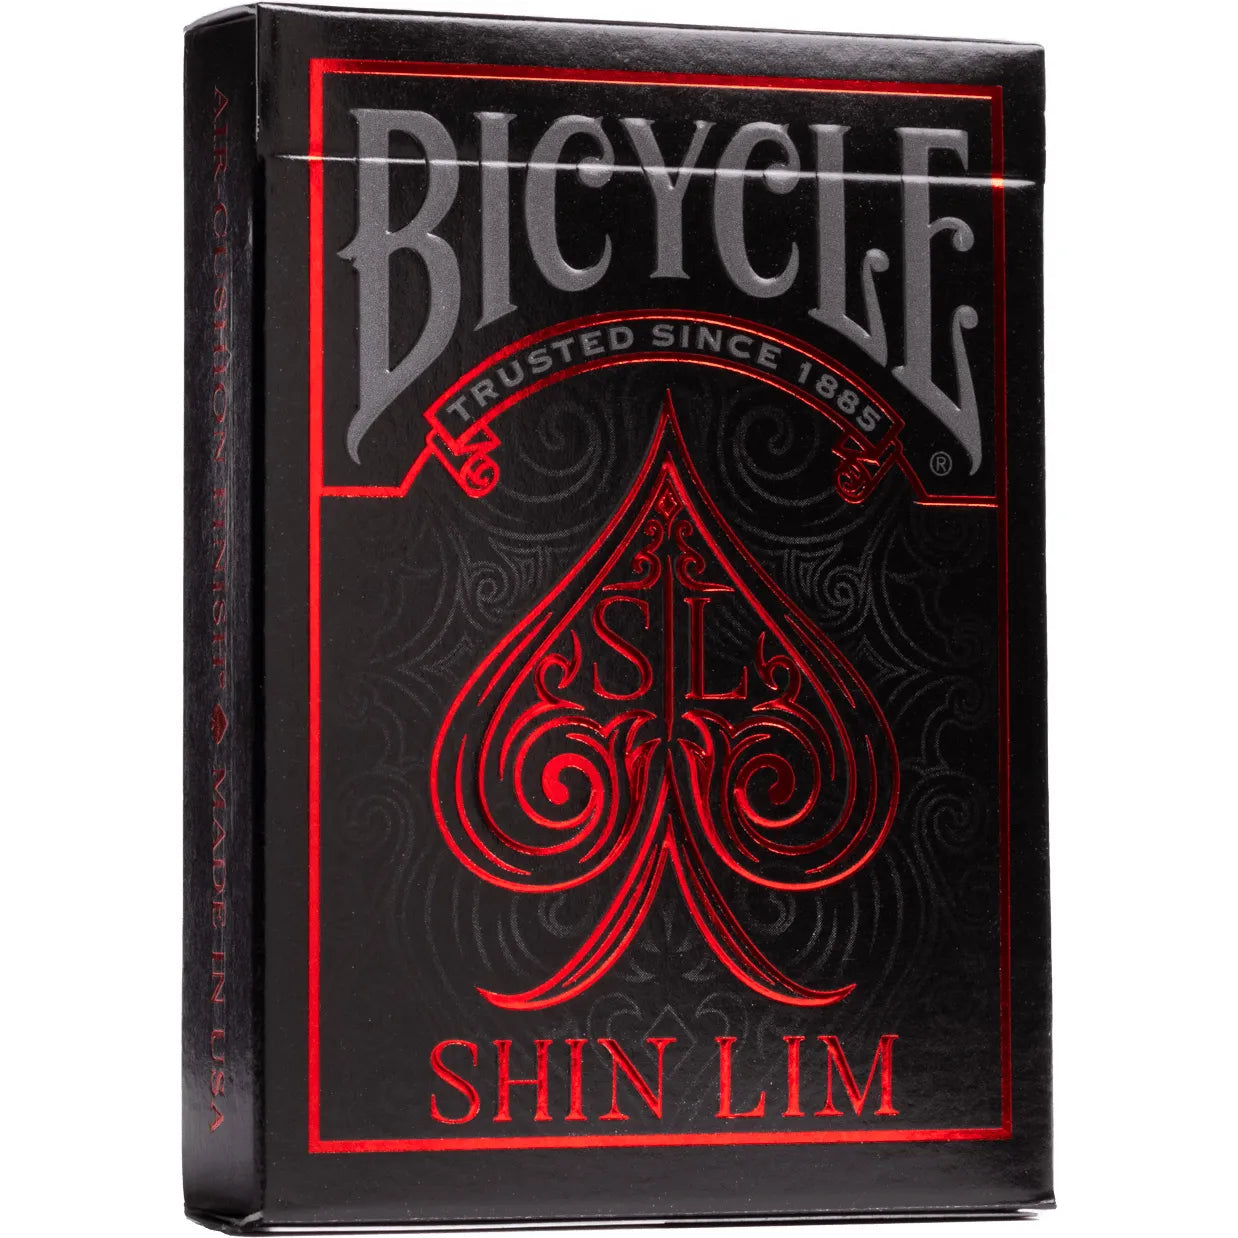 Bicycle Playing Card Deck: Shin Lim Premium Magic Trick Deck in Box